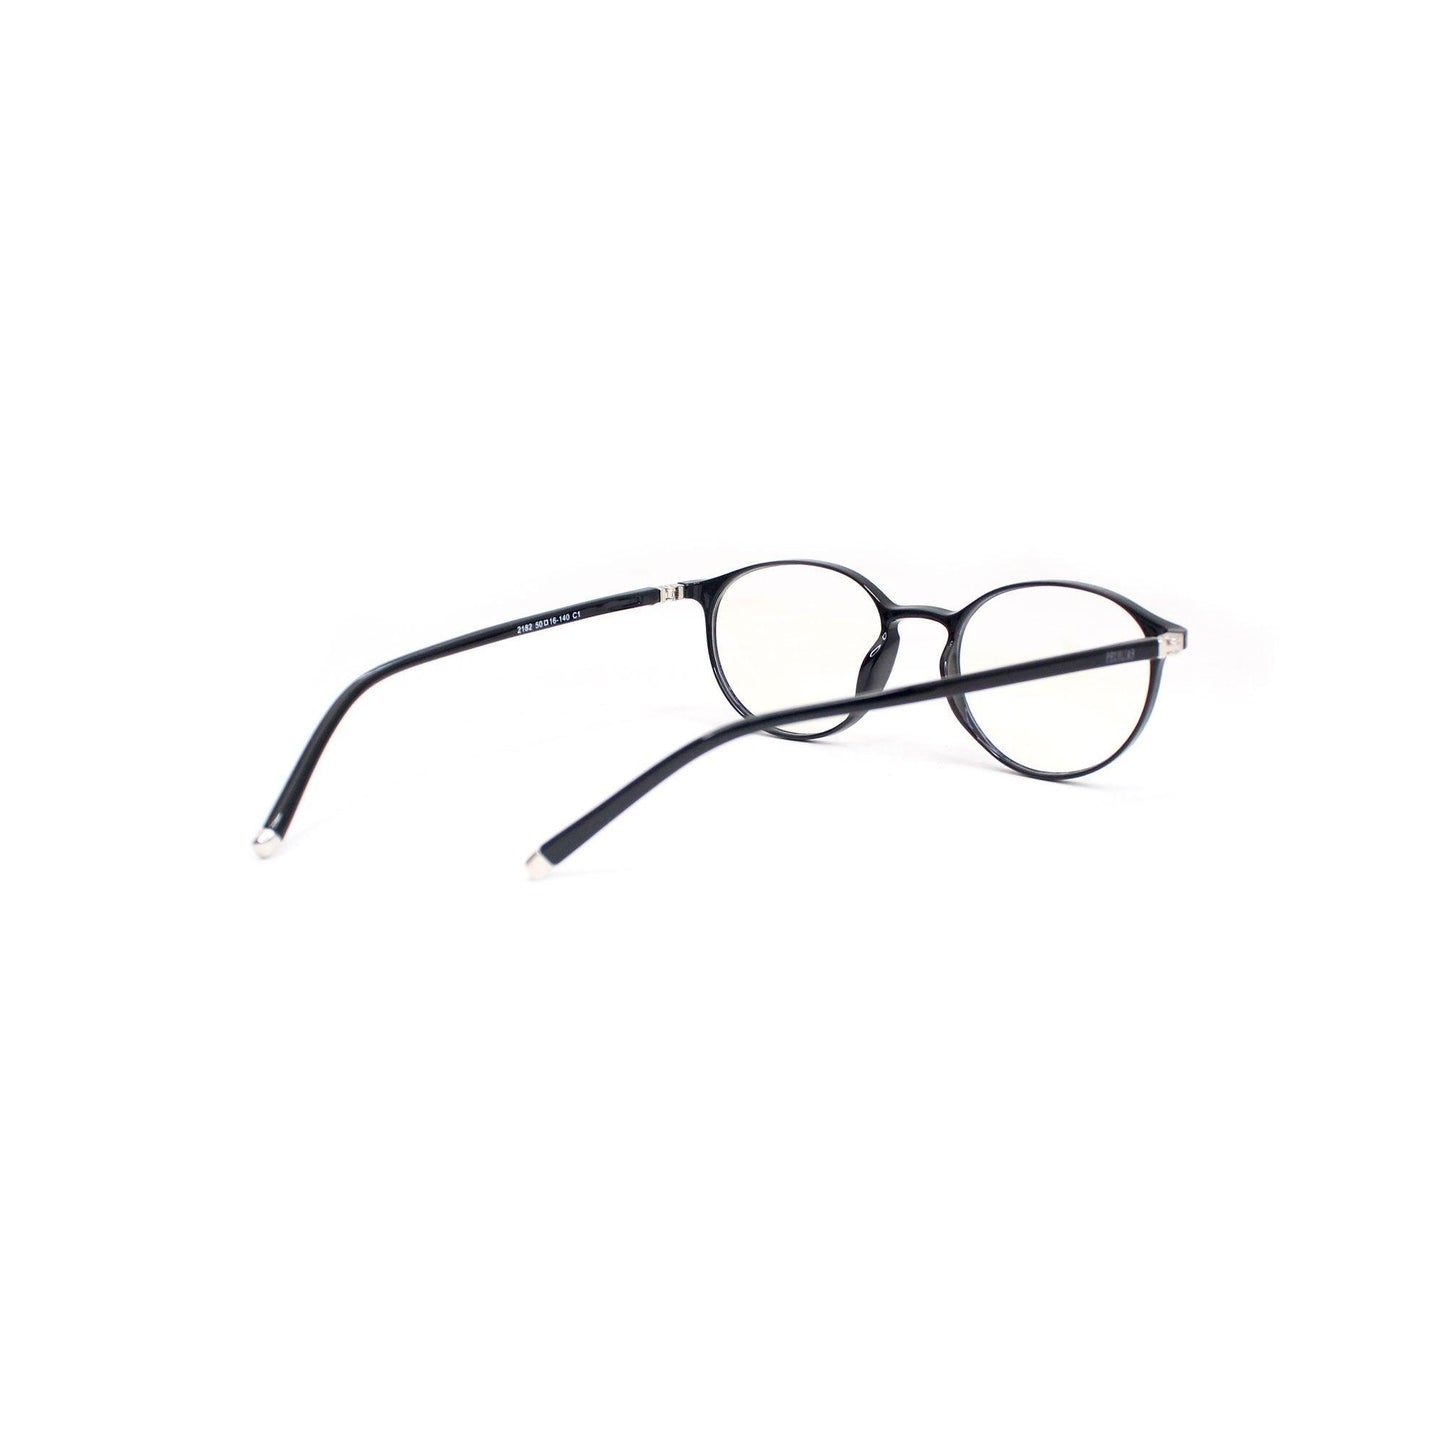 Peculiar NEON Round FLEX TR90 Frame Anti Radiation Glasses UV400 - peculiareyewear